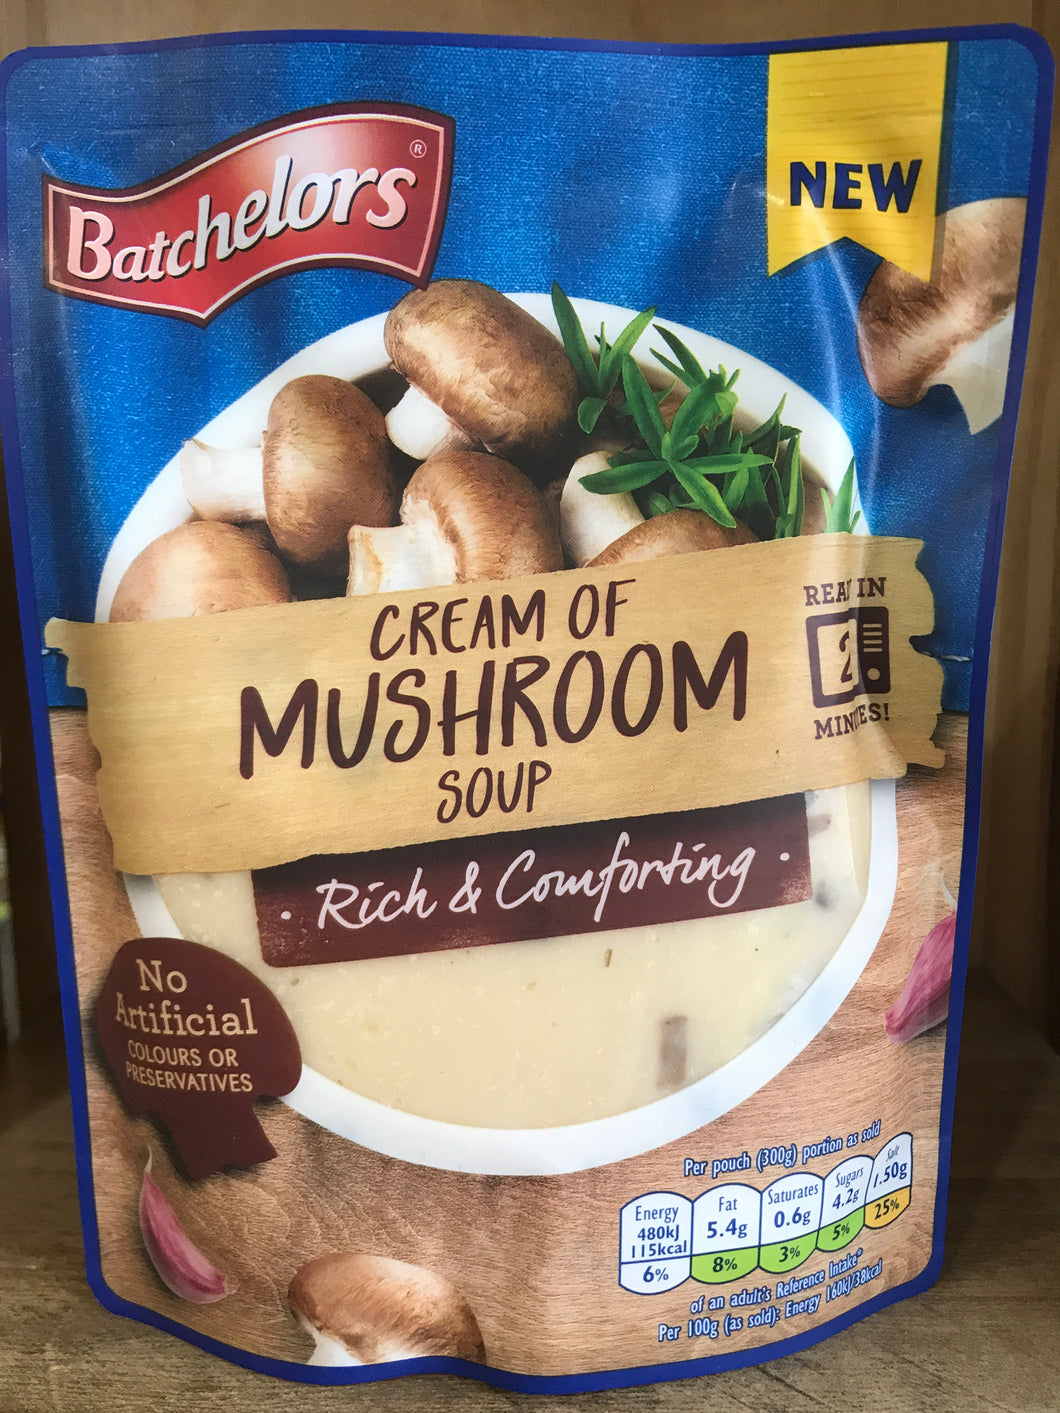 Batchelors Cream of Mushroom Soup 300g